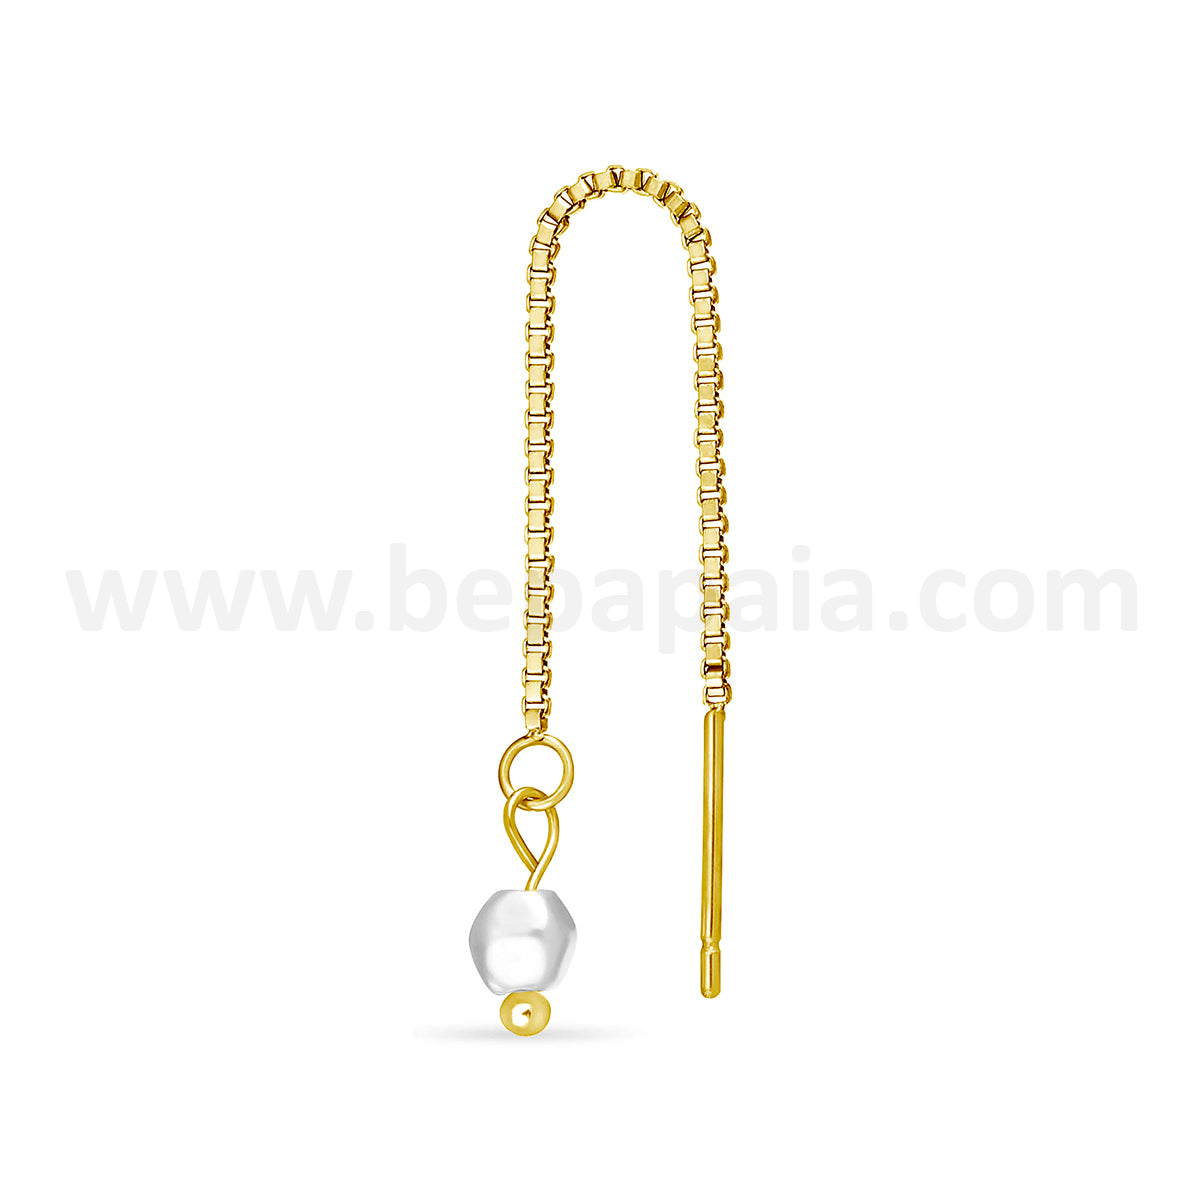 Golden hoop earring with pearl assorted designs
